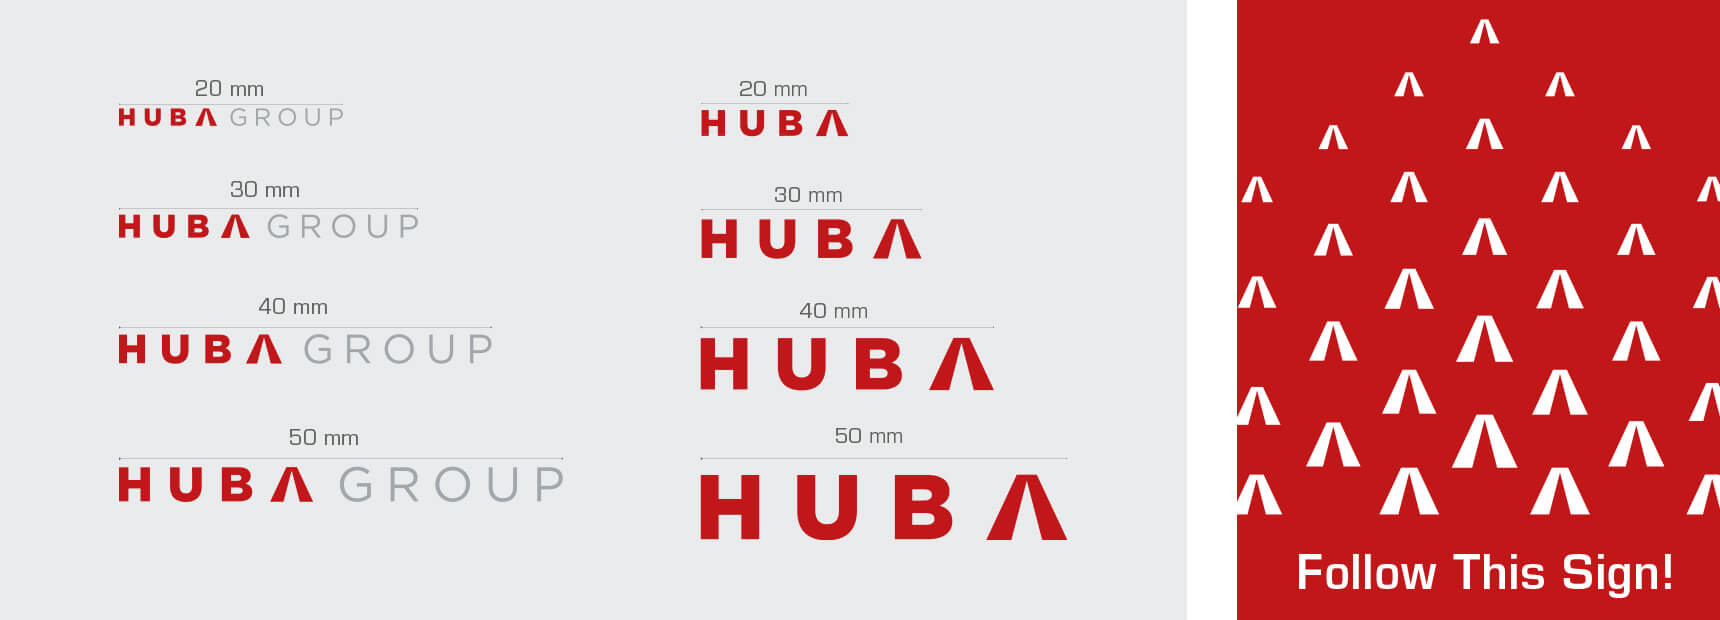 Huba-2 - wrinting 1-3 - video 1-5 - icon part-6 - hub-7 - icon writing-8 - logo-9 - brand page mockup-10 - type-11 - logo part-12 - color-13 - huba-görsel-Proje Özeti-14 - görsel kimlik-15 - video 3-16 - minimum size